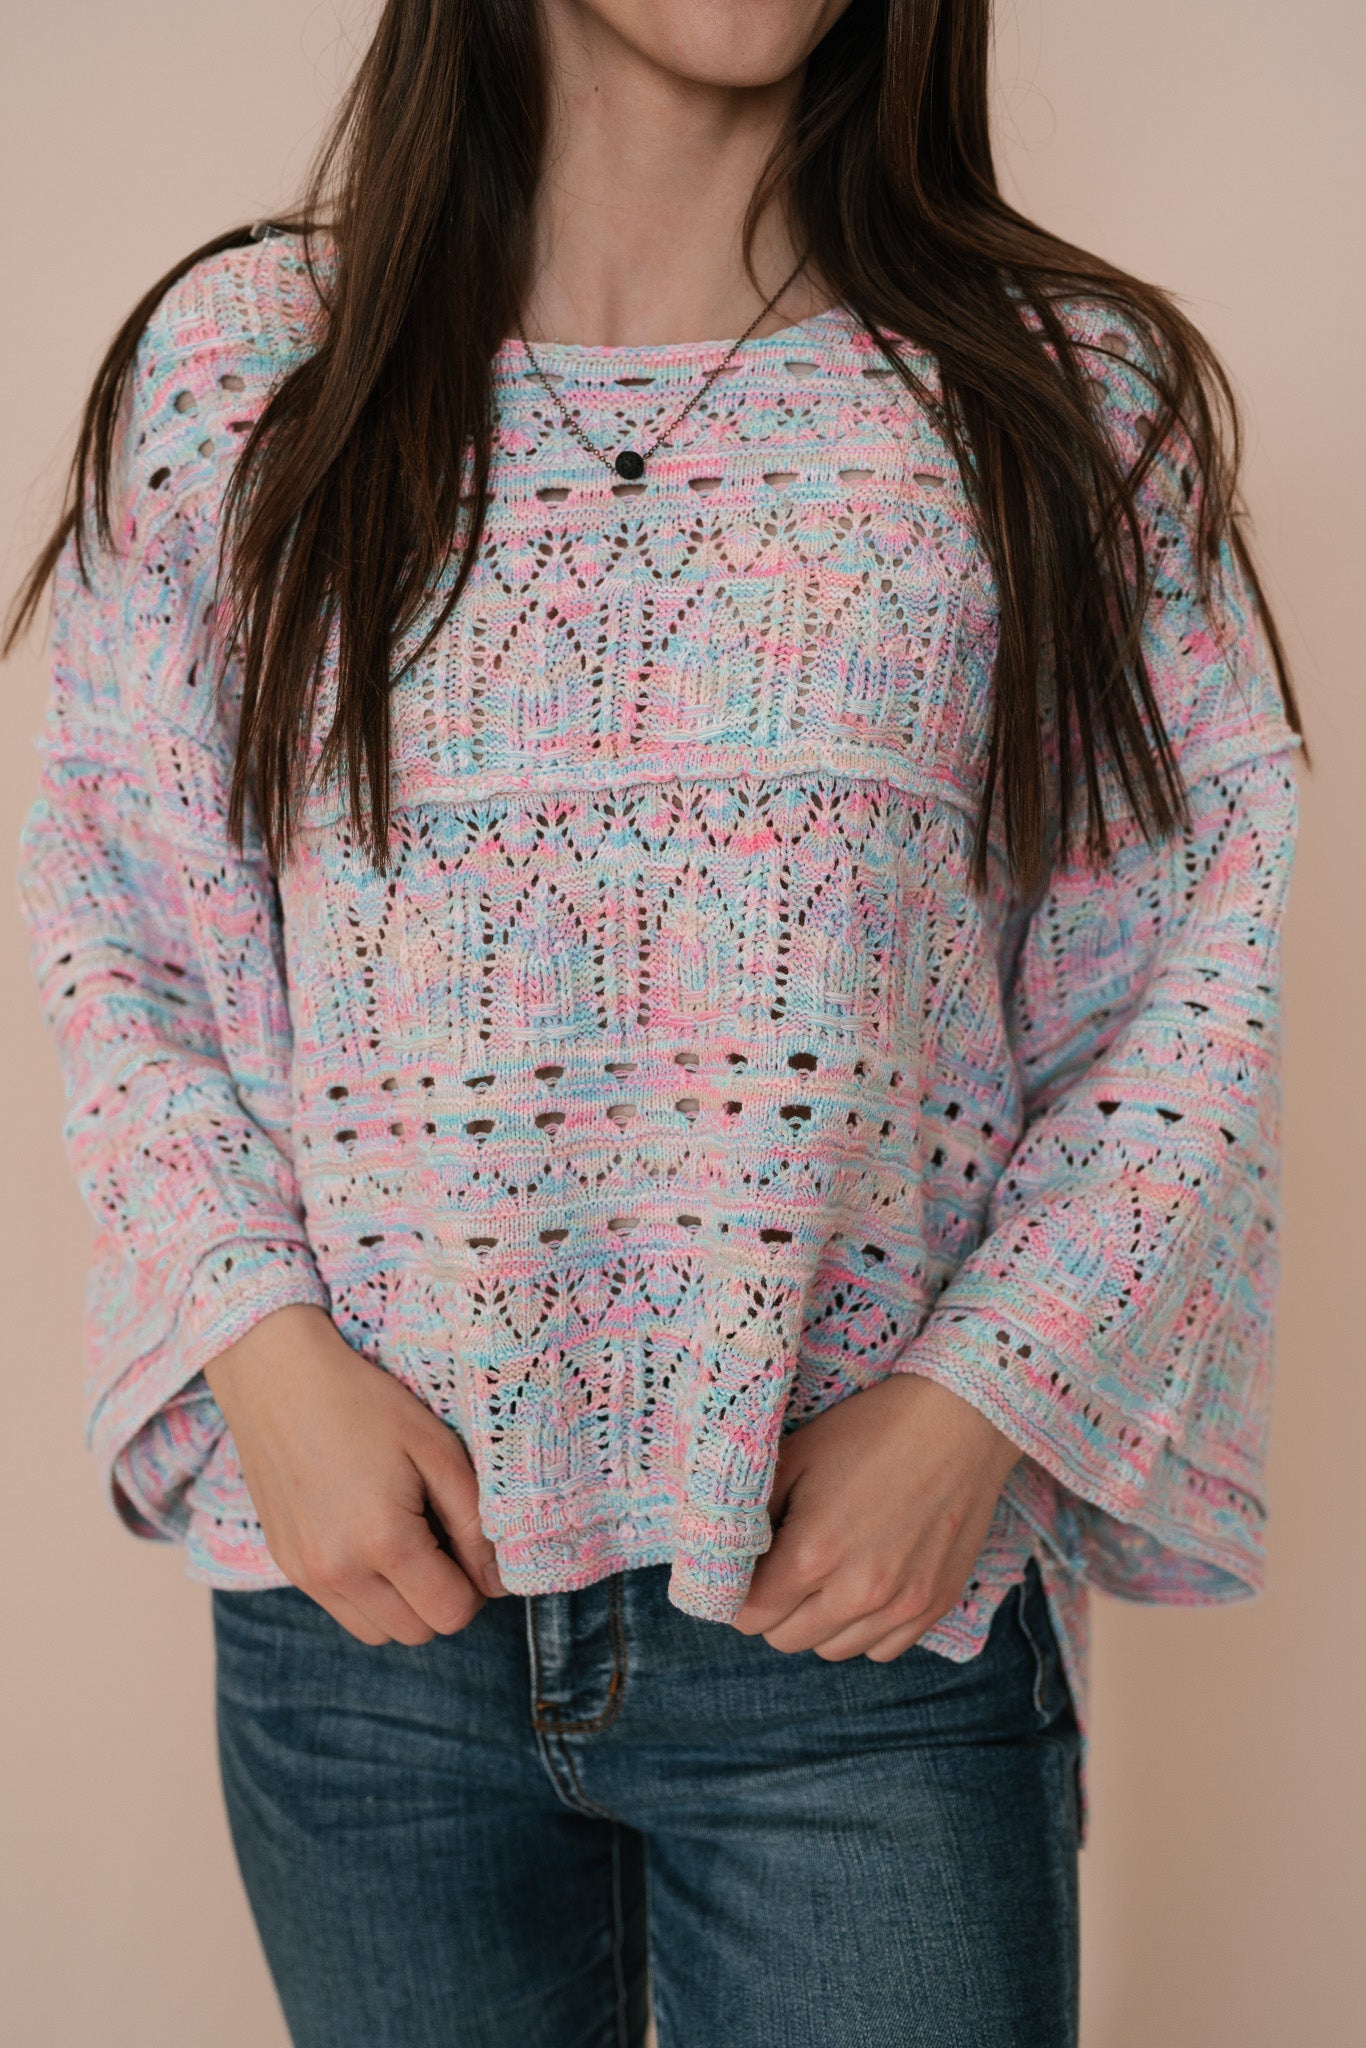 Brianna Cotton Candy Sweater